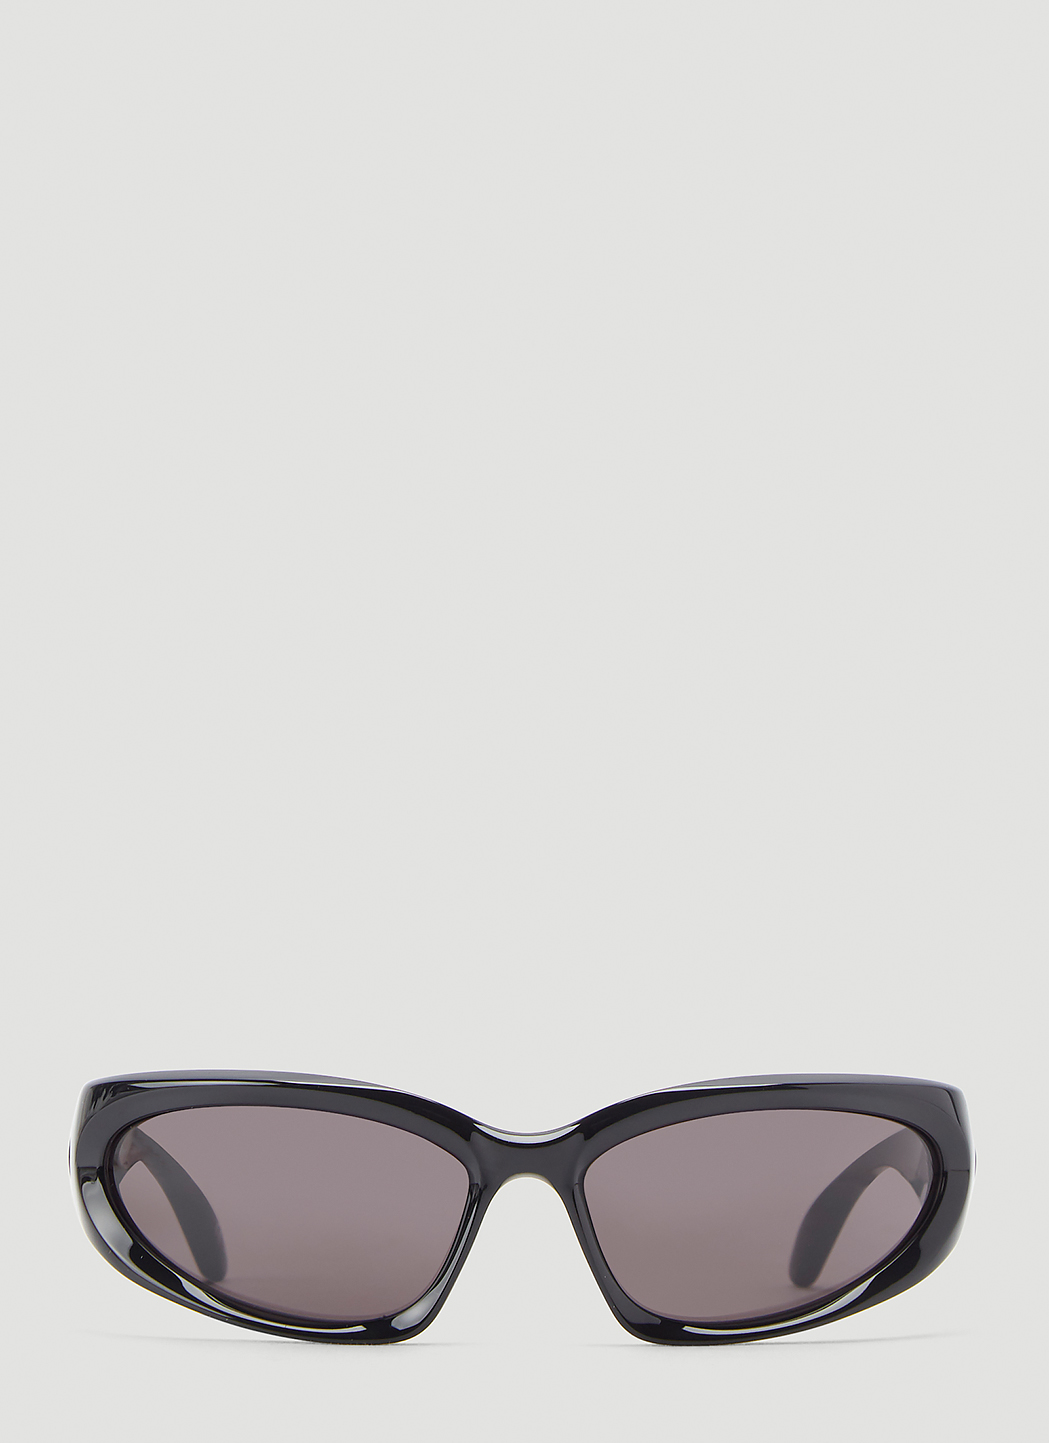 Swift Oval Sunglasses